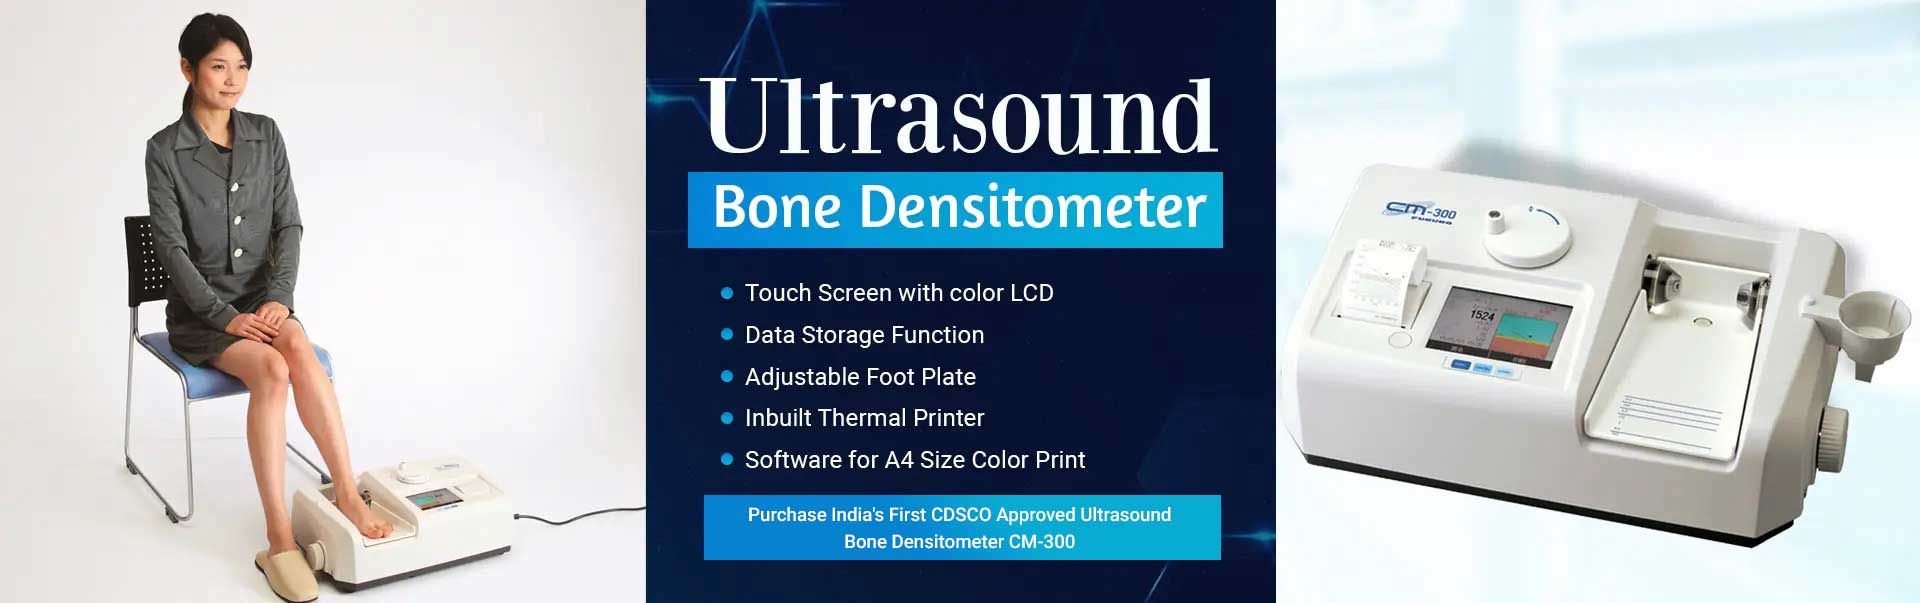 Ultrasound Bone Densitometer Manufacturers in Guwahati